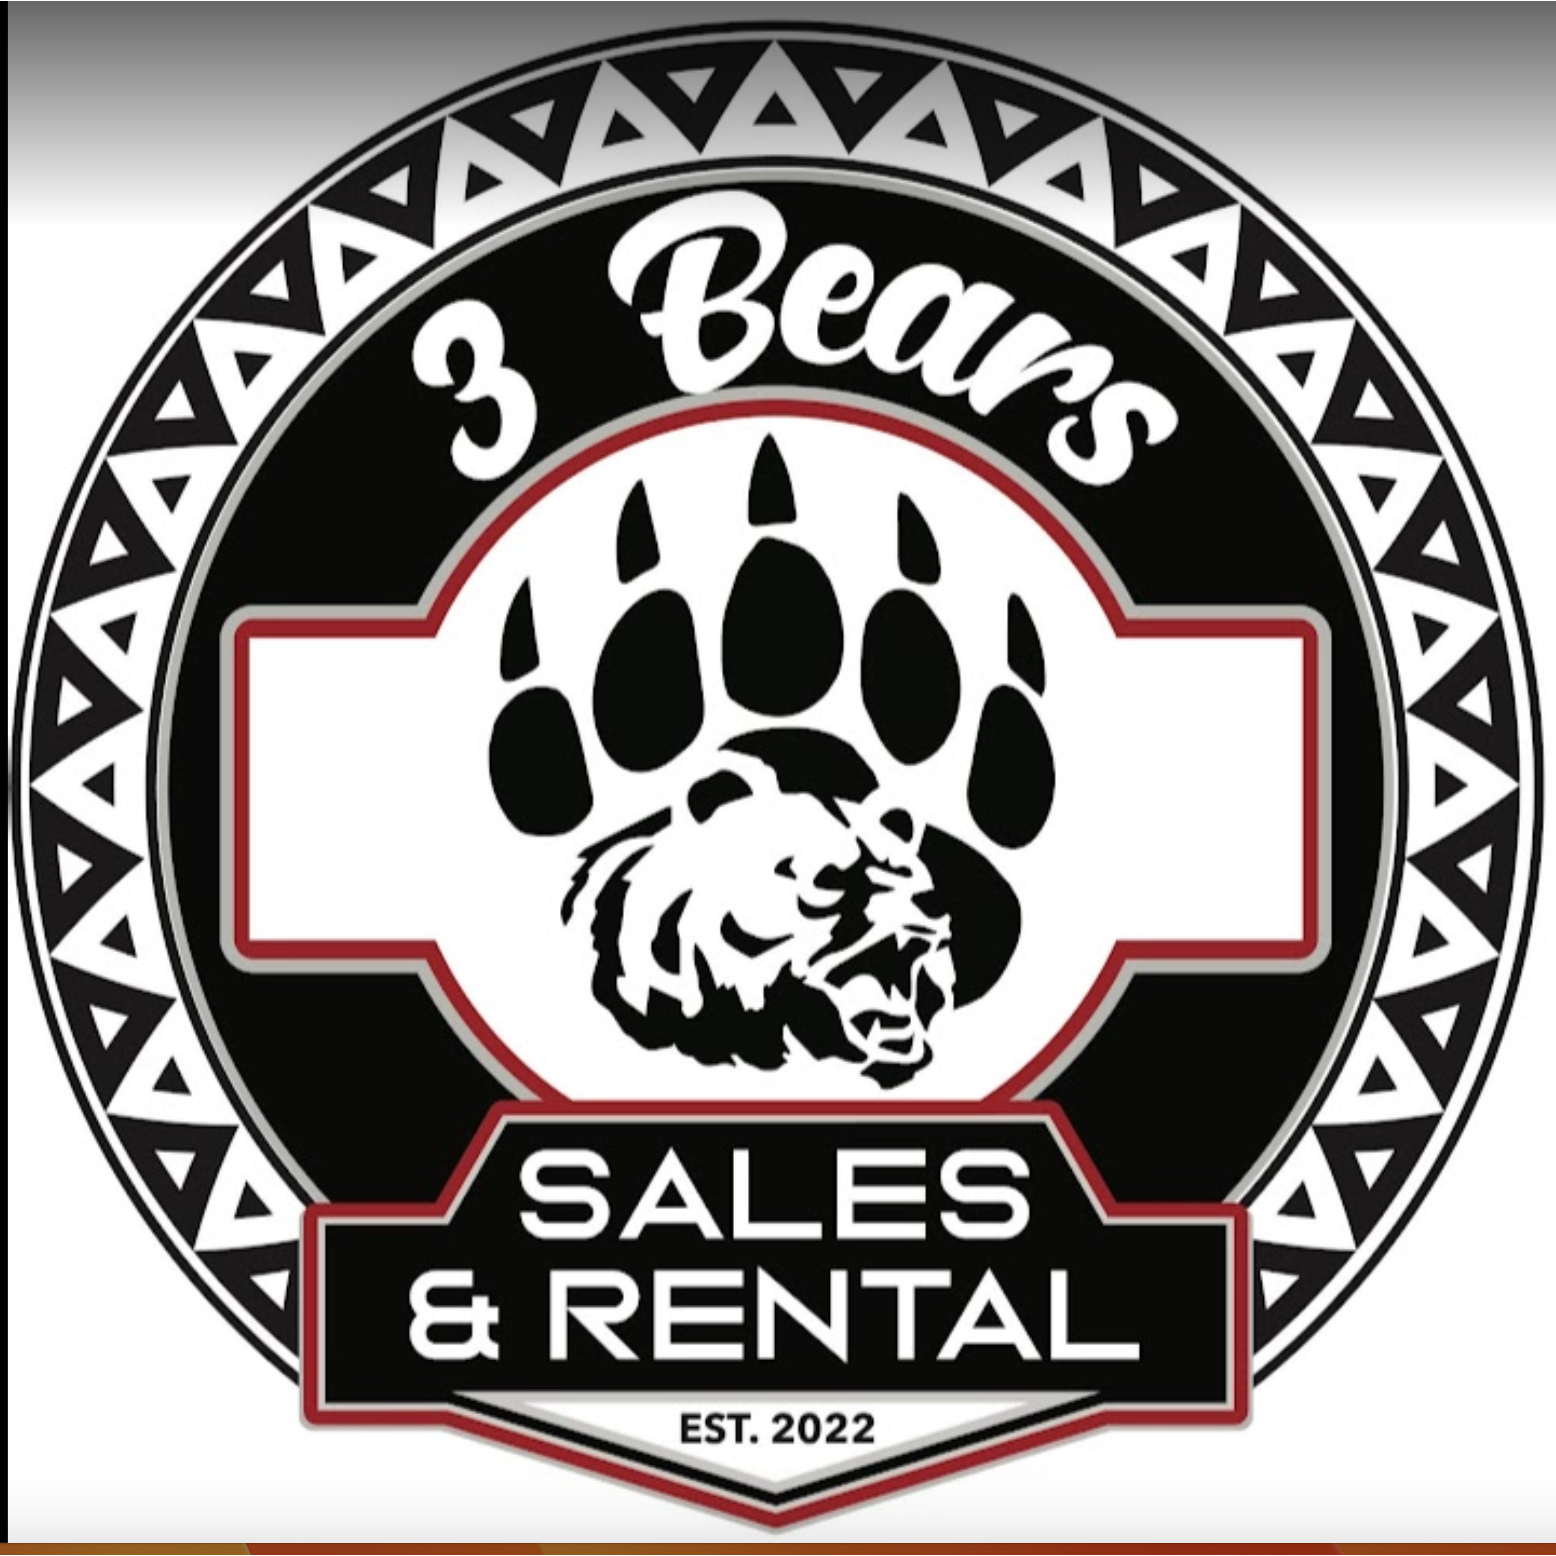 3 Bears Sales & Rental - Henryetta, OK 74437 - (539)600-8413 | ShowMeLocal.com